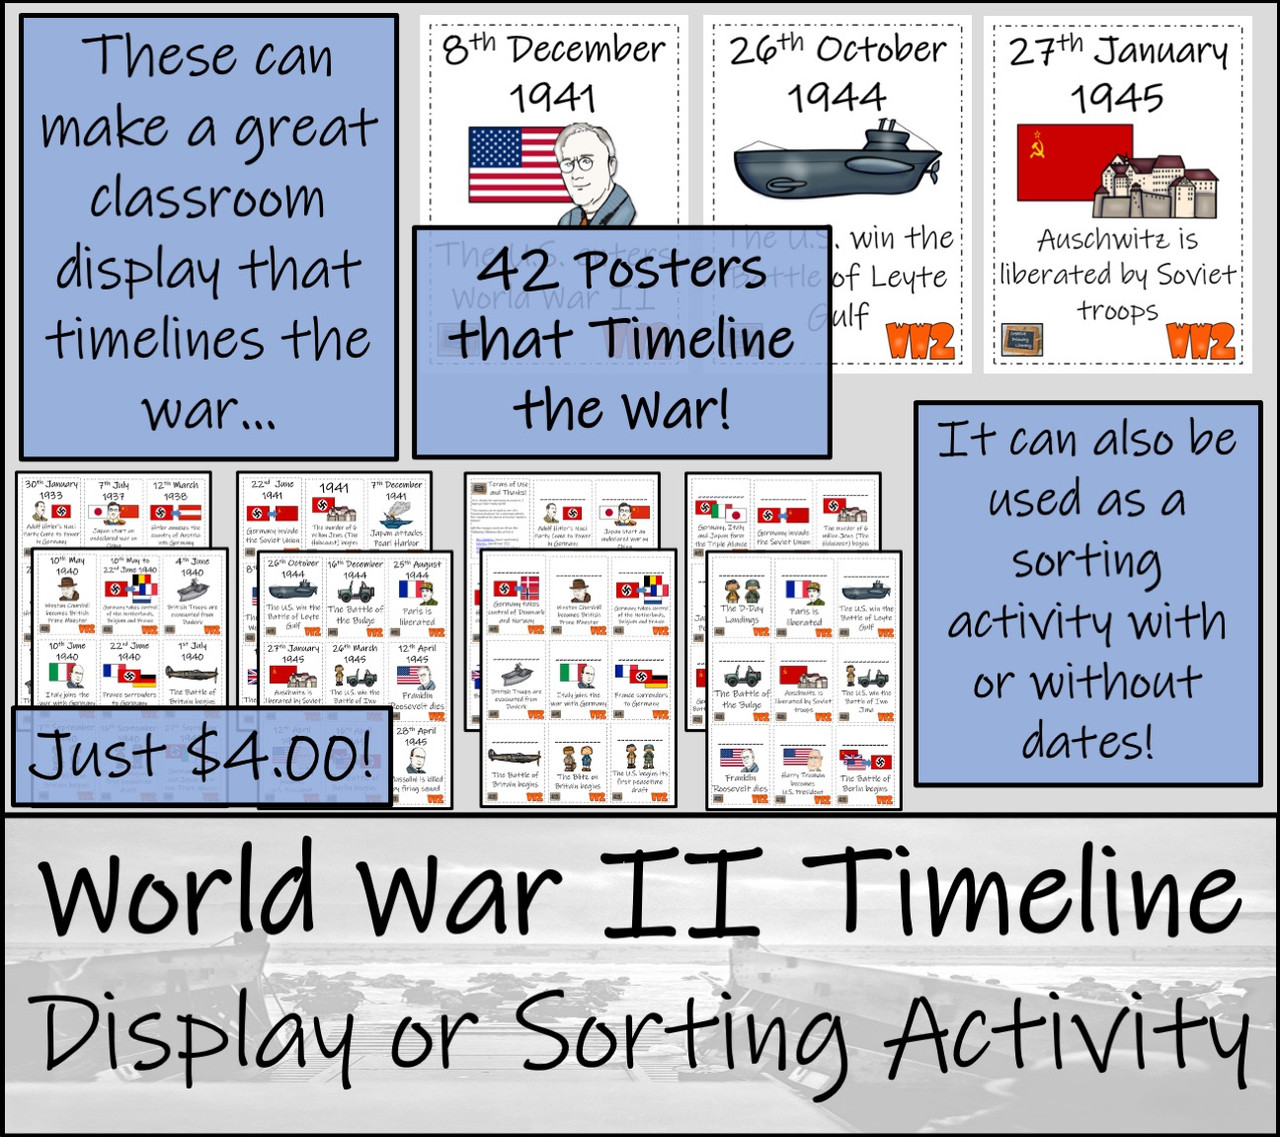 World War II Timeline Display and Sorting Activity